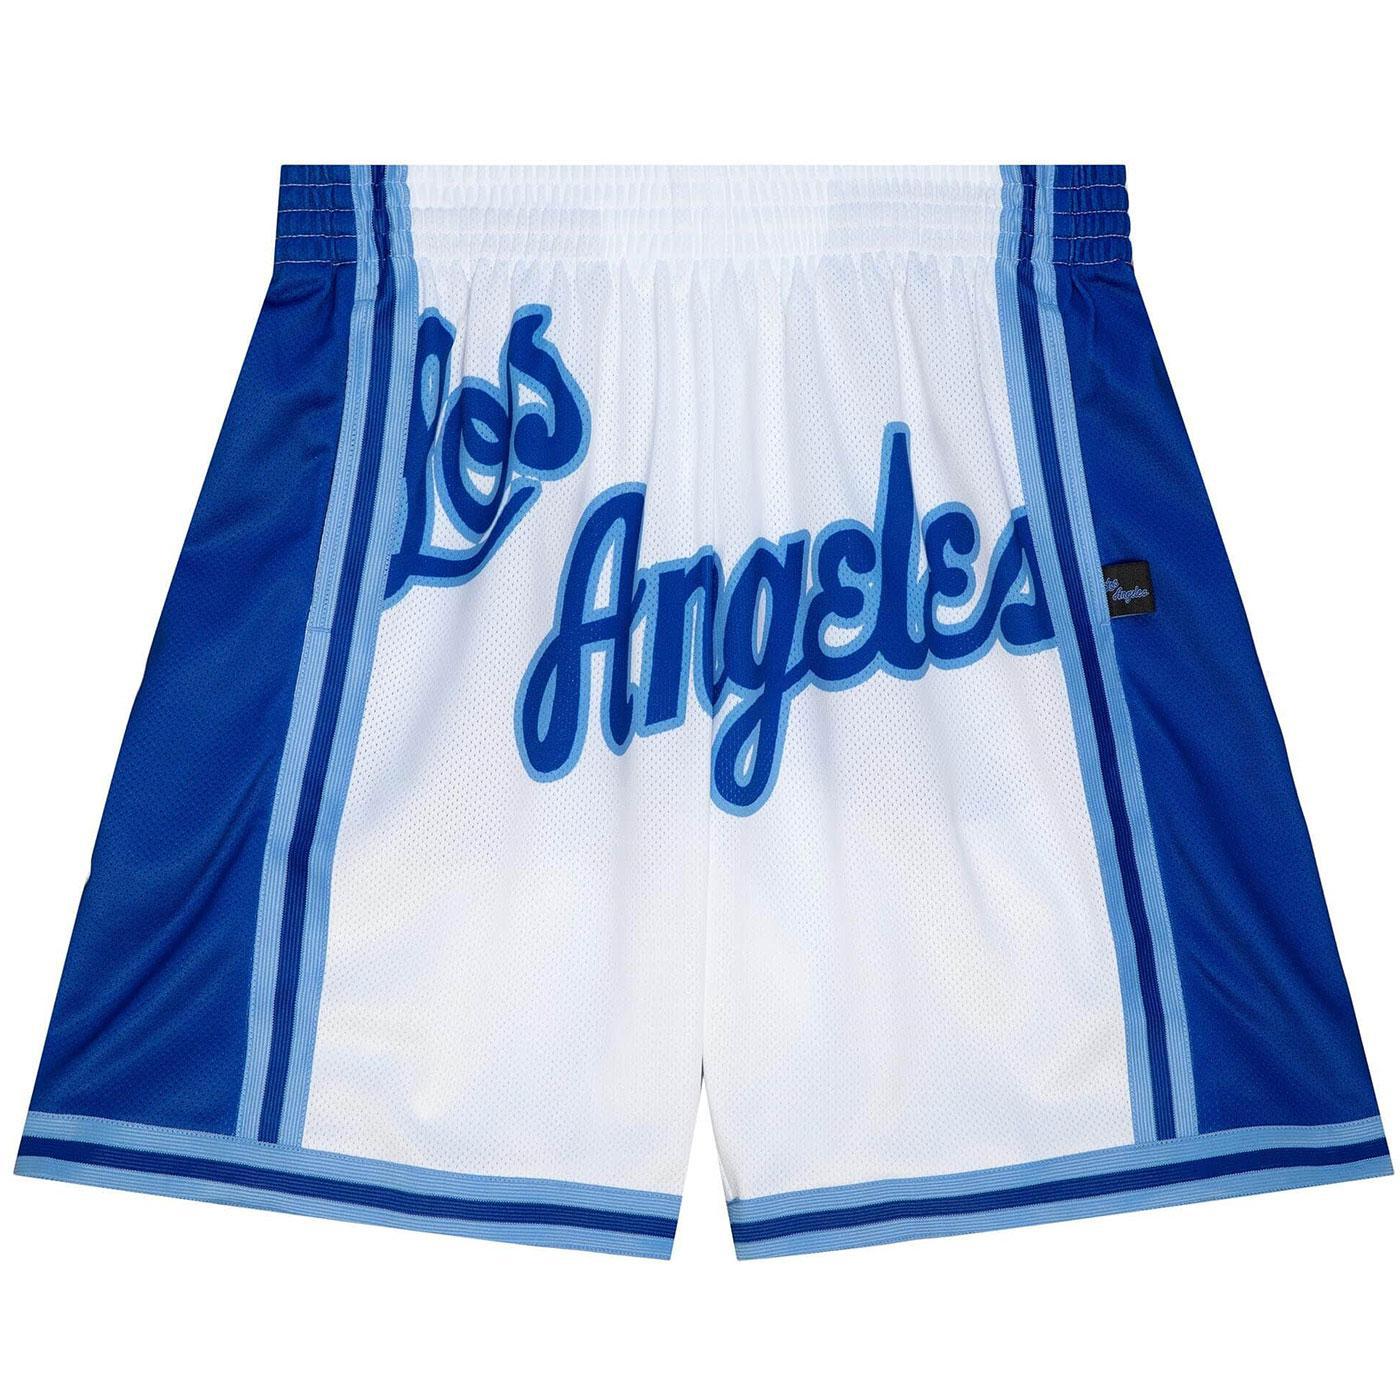 los angeles lakers shorts blue